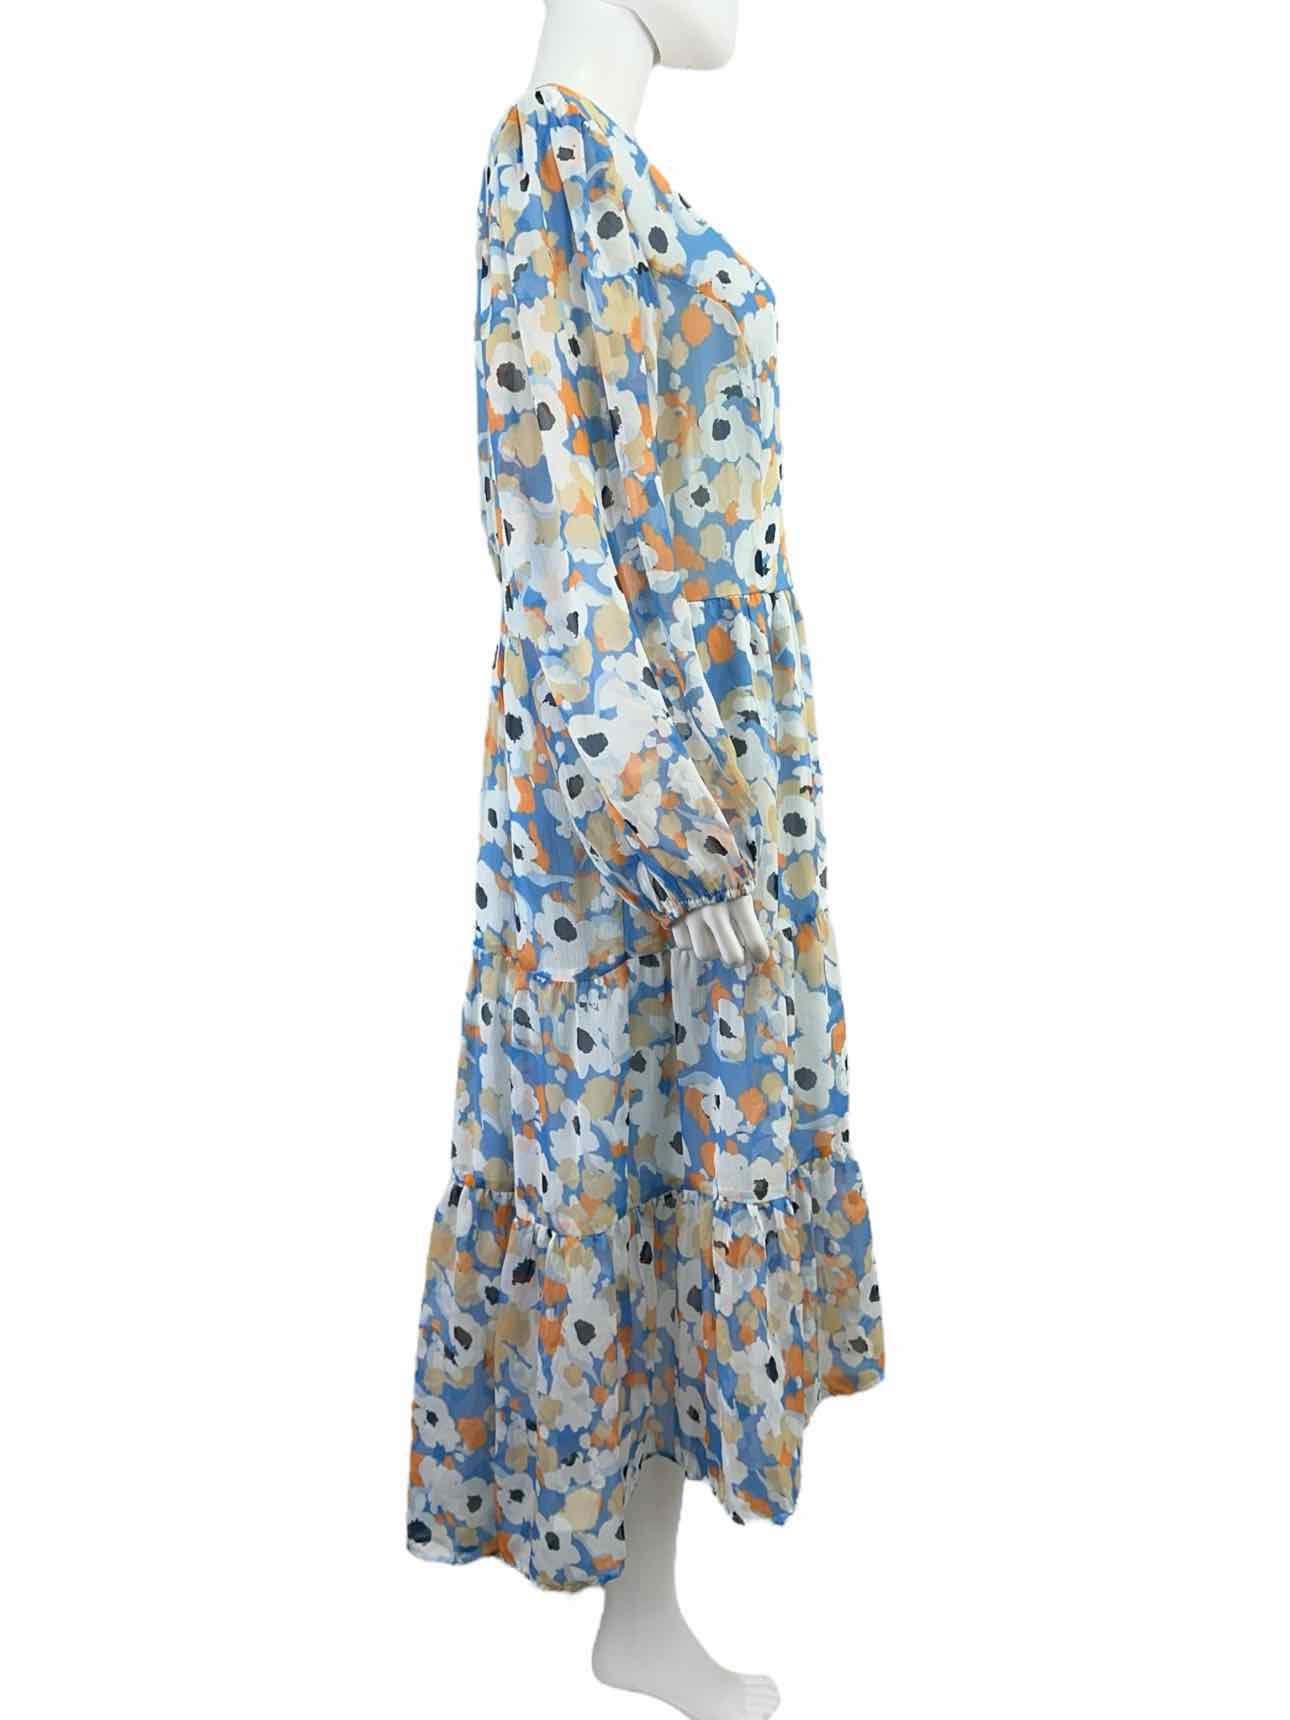 joie Size NWT Blue Floral Print Maxi Dress Size XL